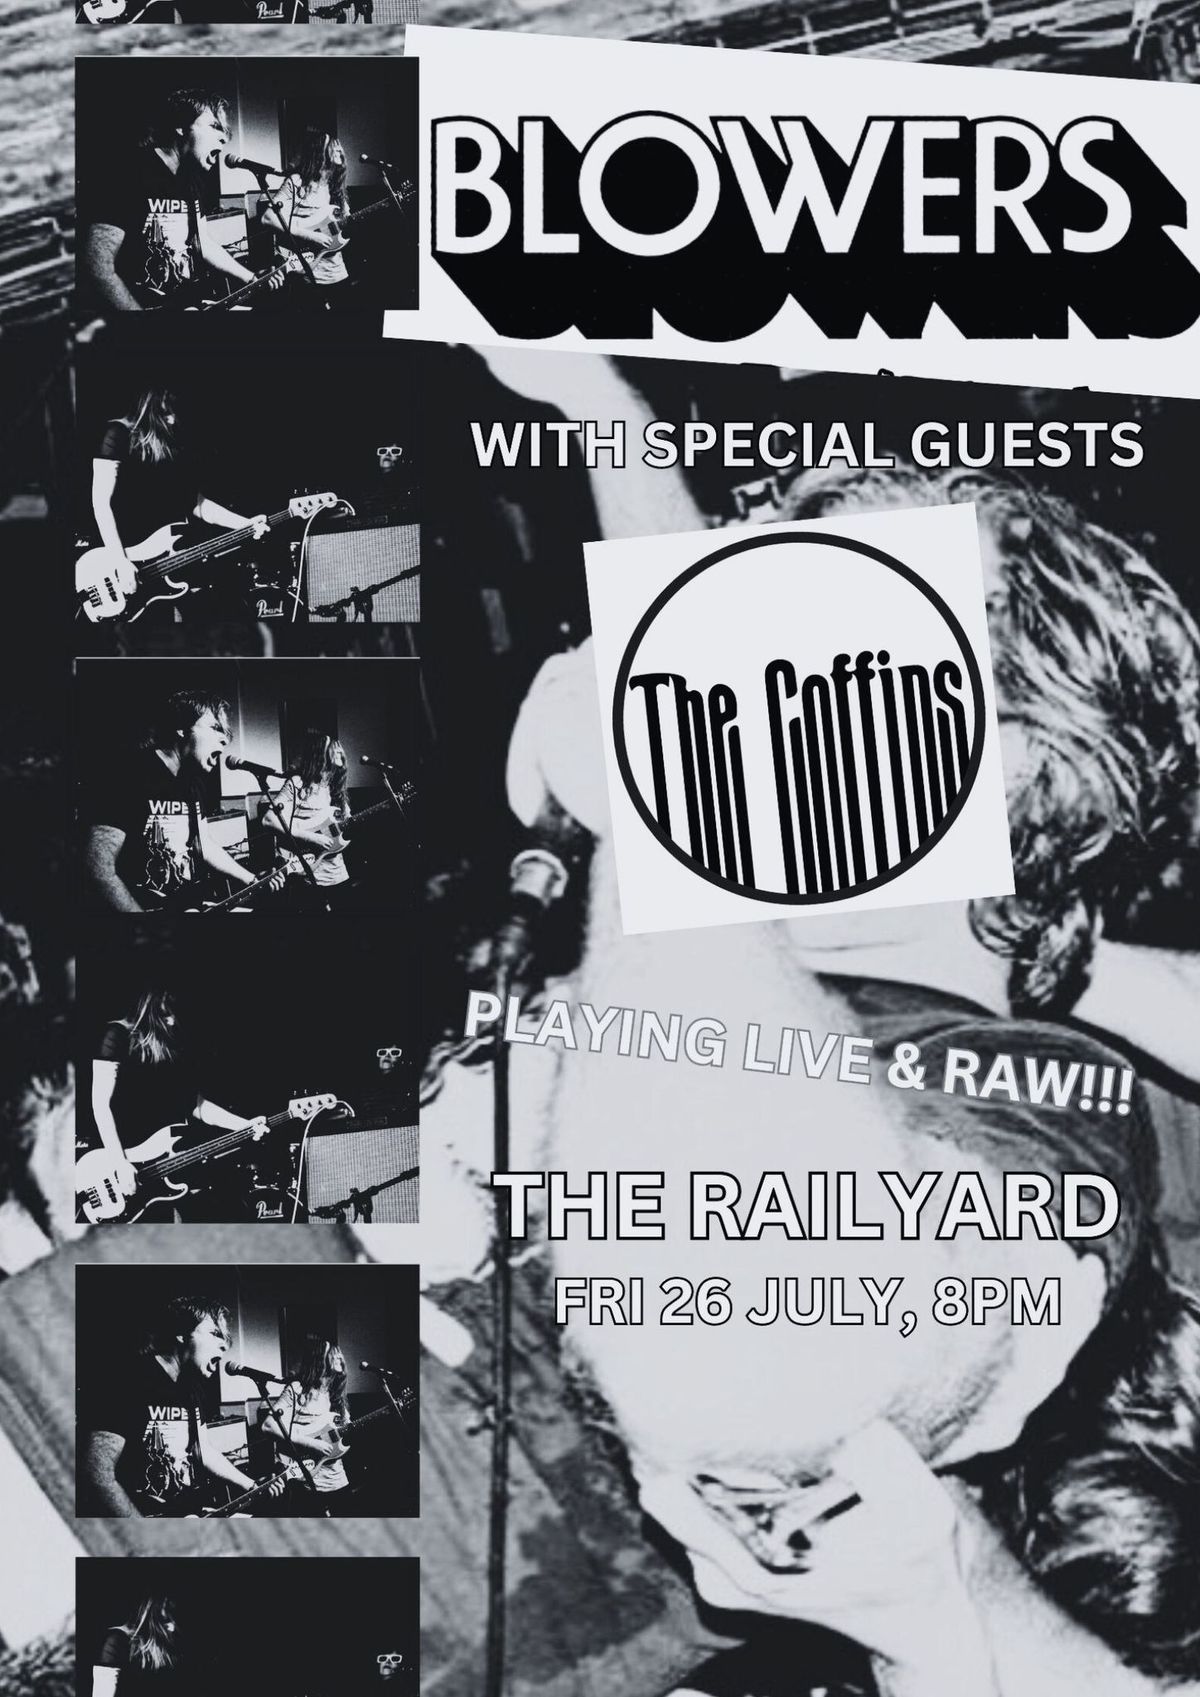 Blowers + The Coffins @ The Railyard - FRI 26 JULY